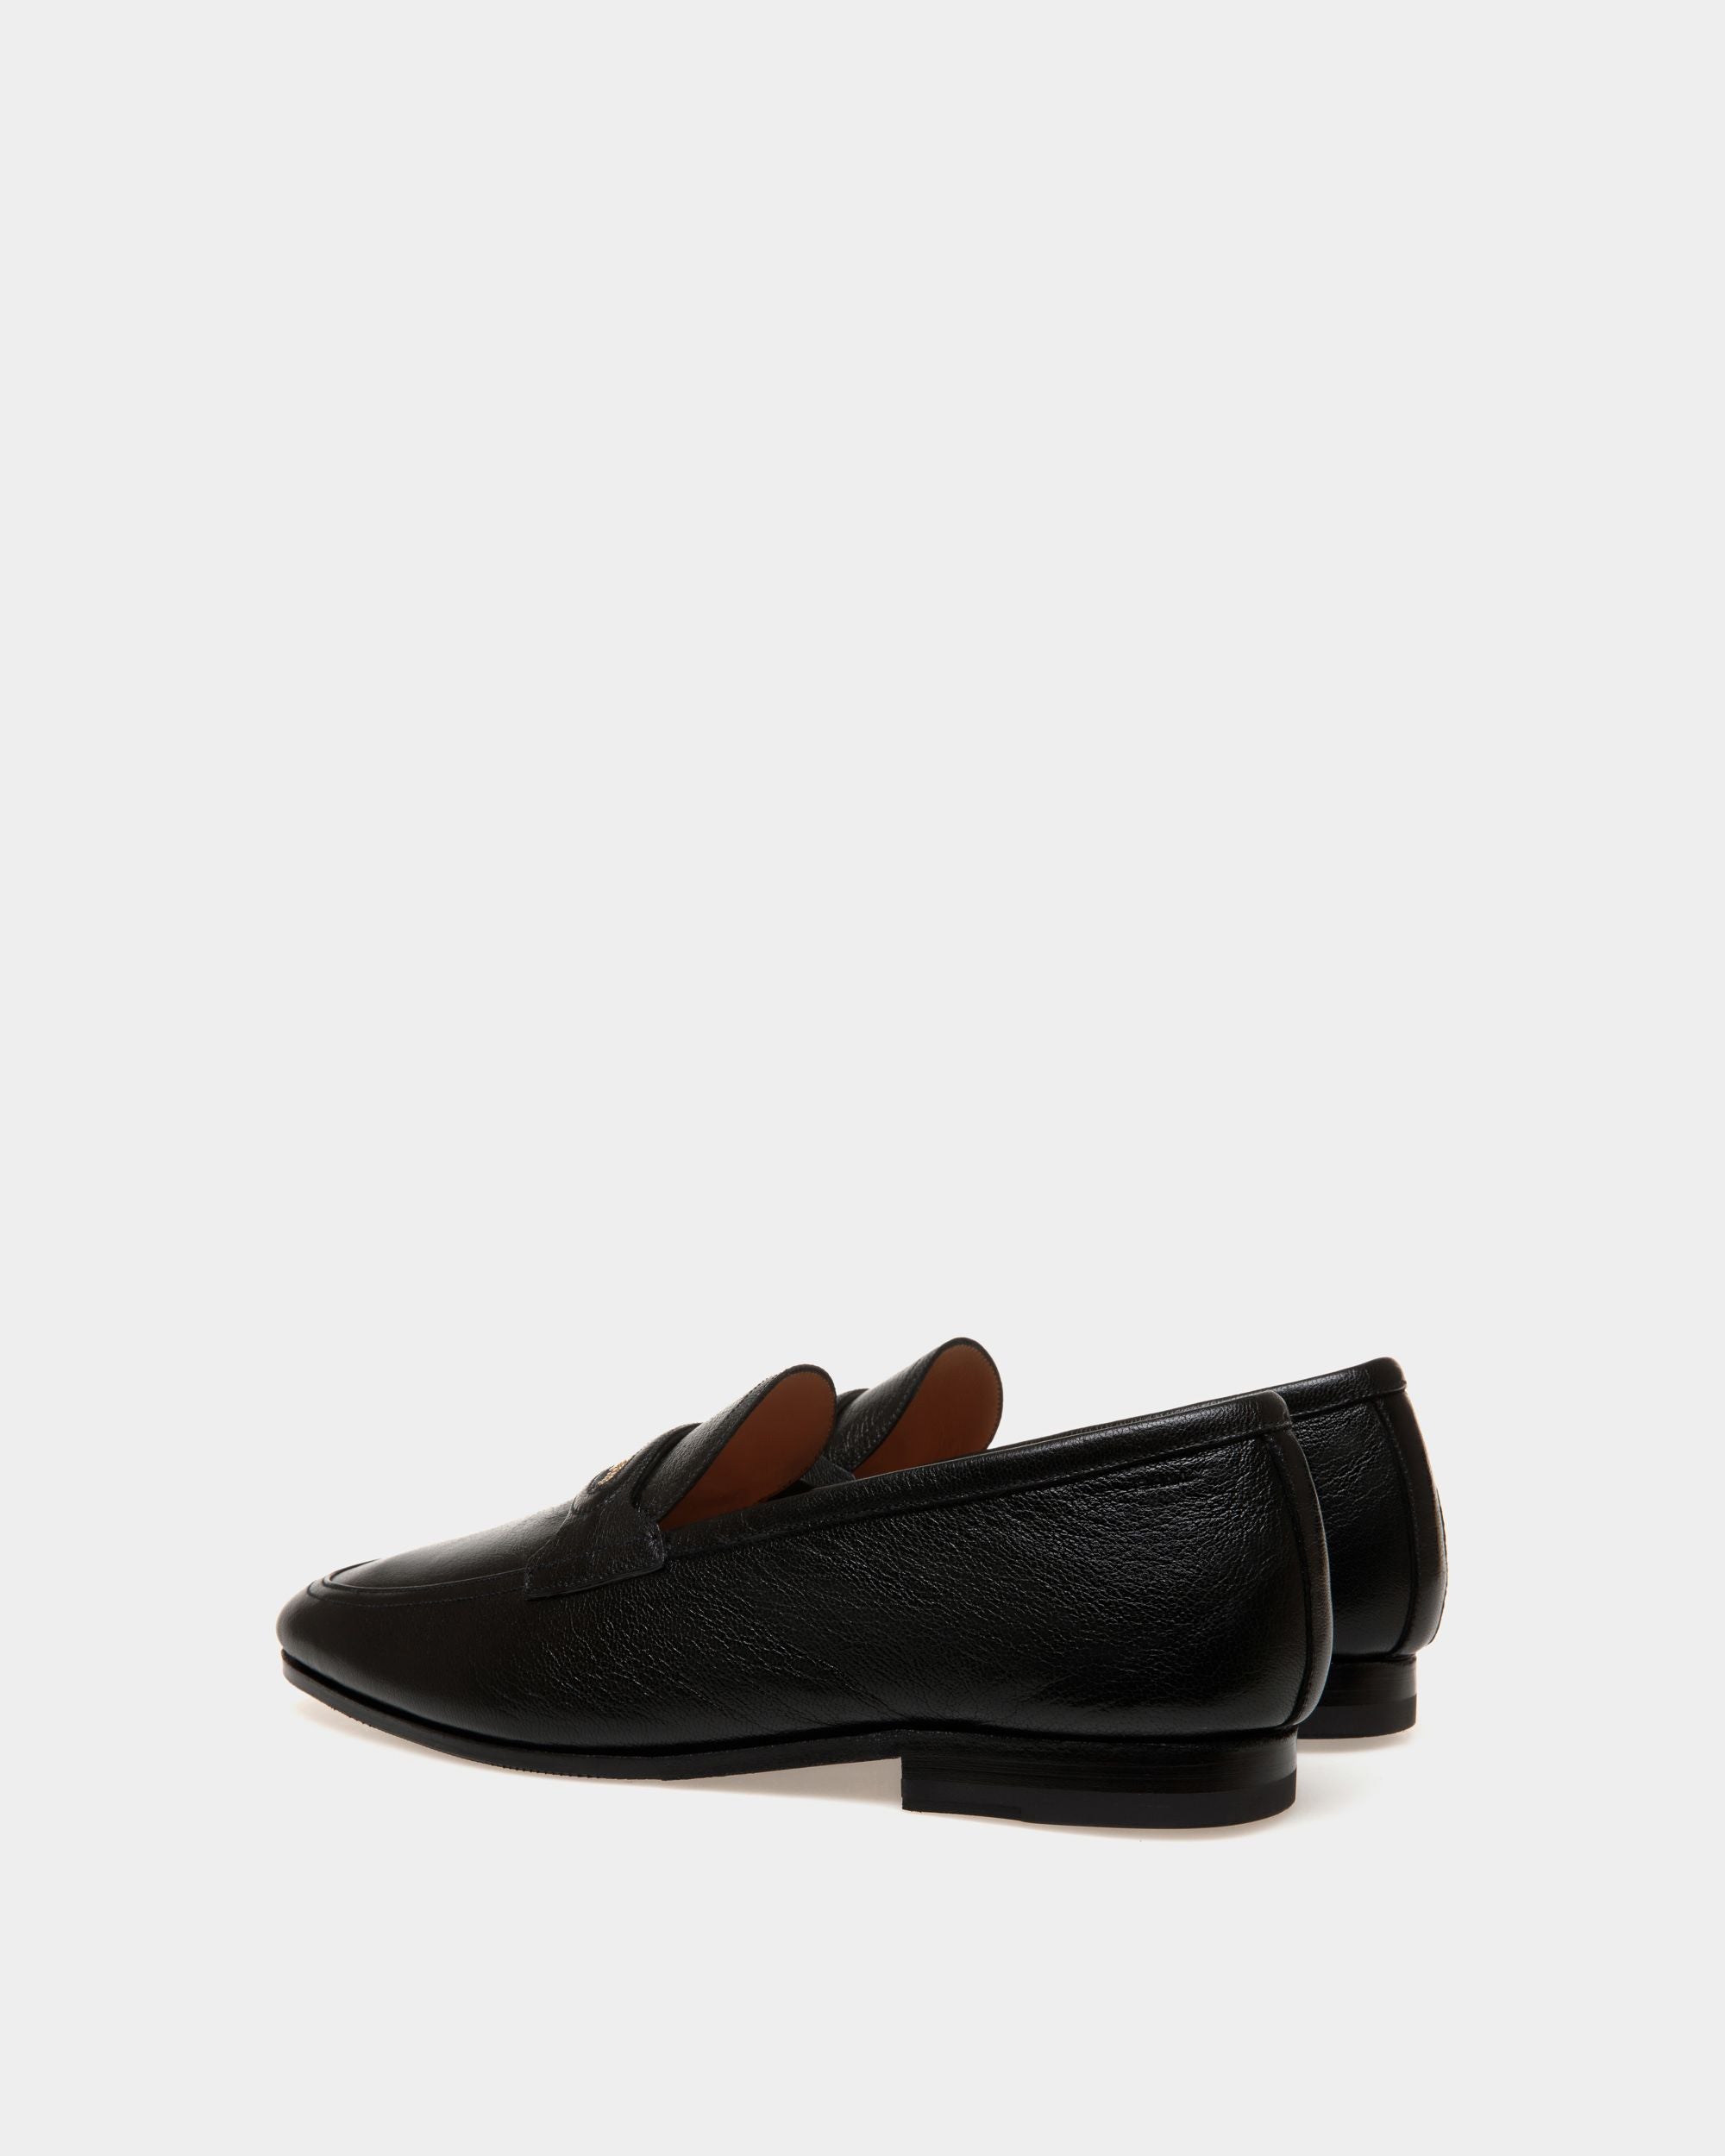 Plume | Men's Loafer in Black Grained Leather | Bally | Still Life 3/4 Back